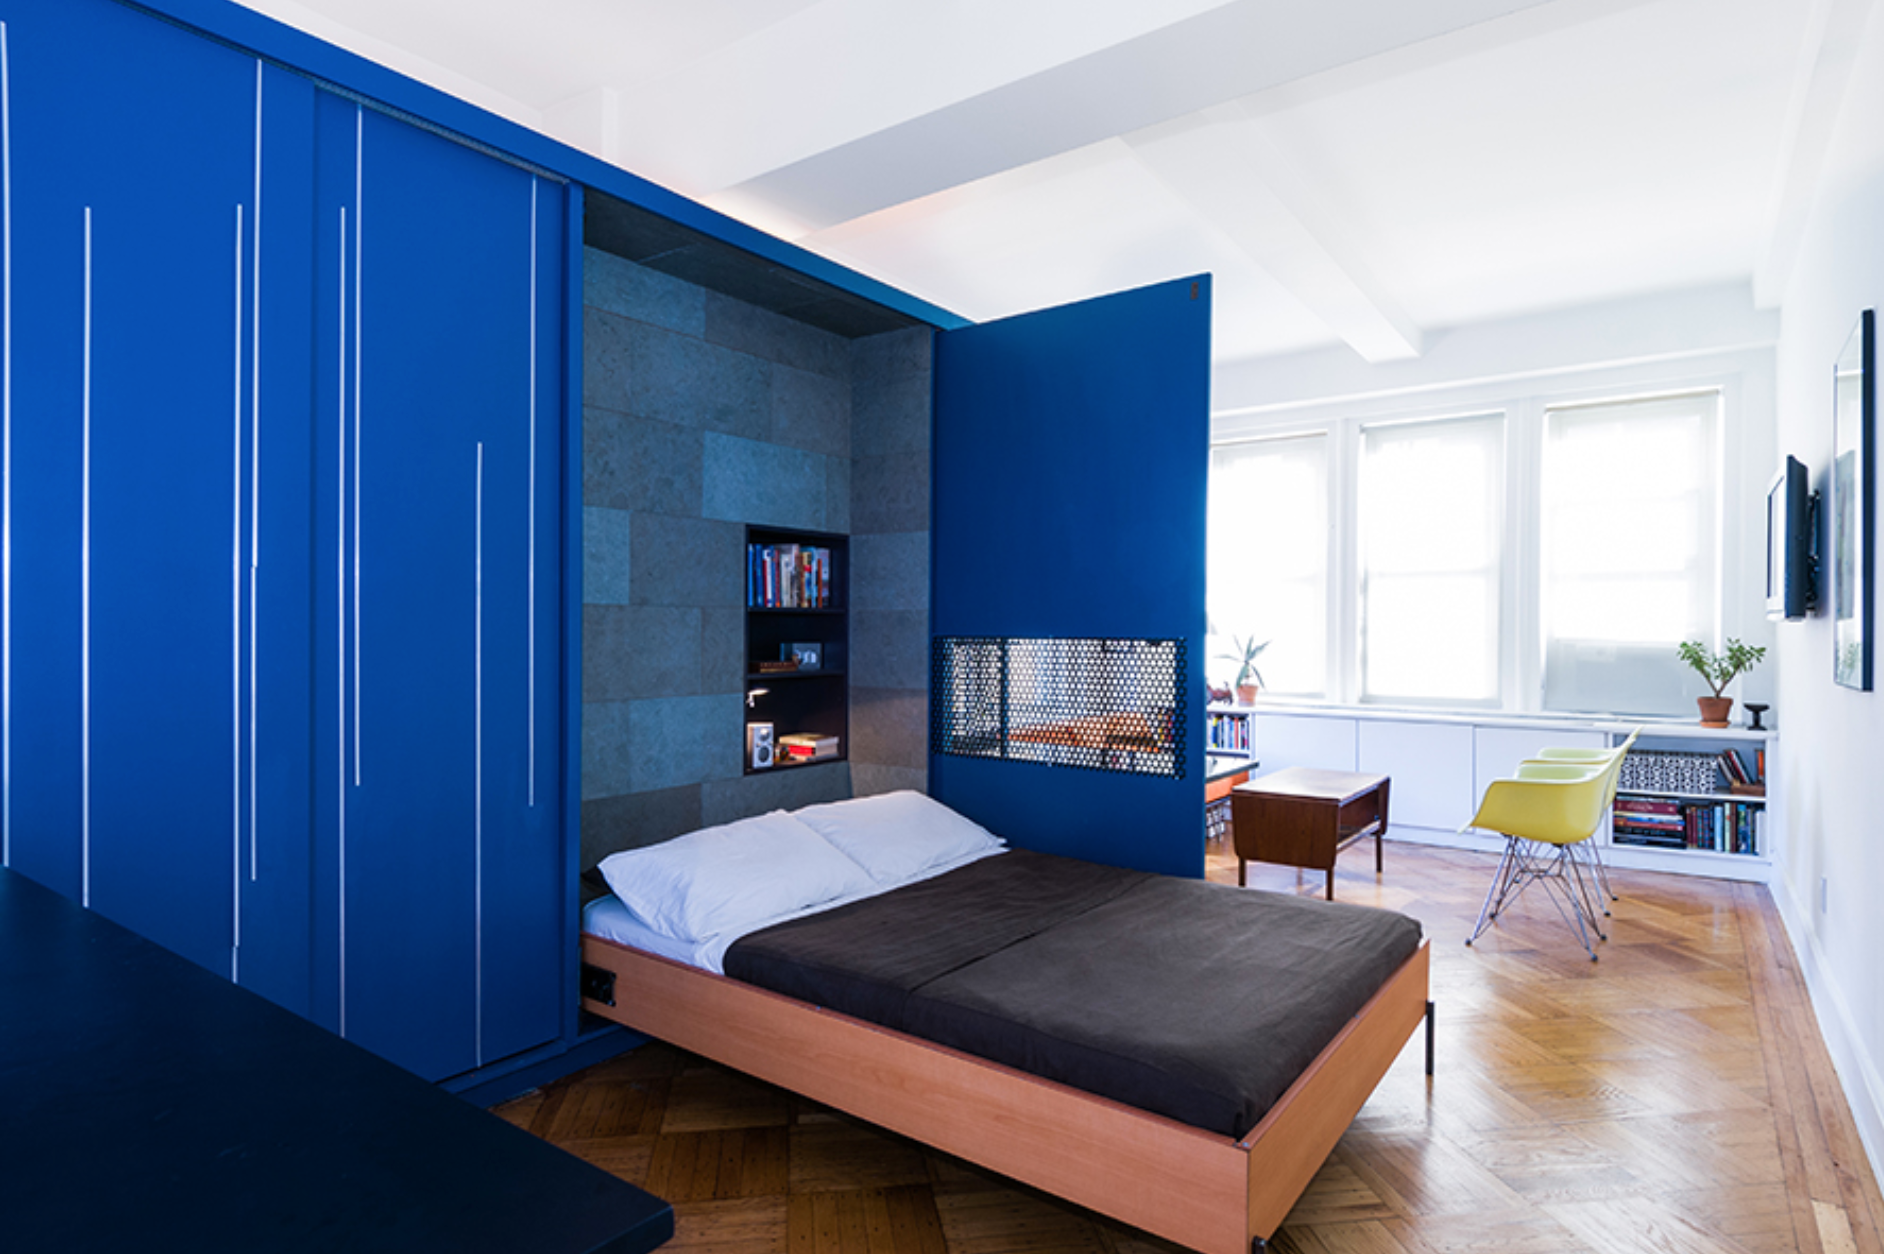 The Best Examples of Murphy beds in Interior Design